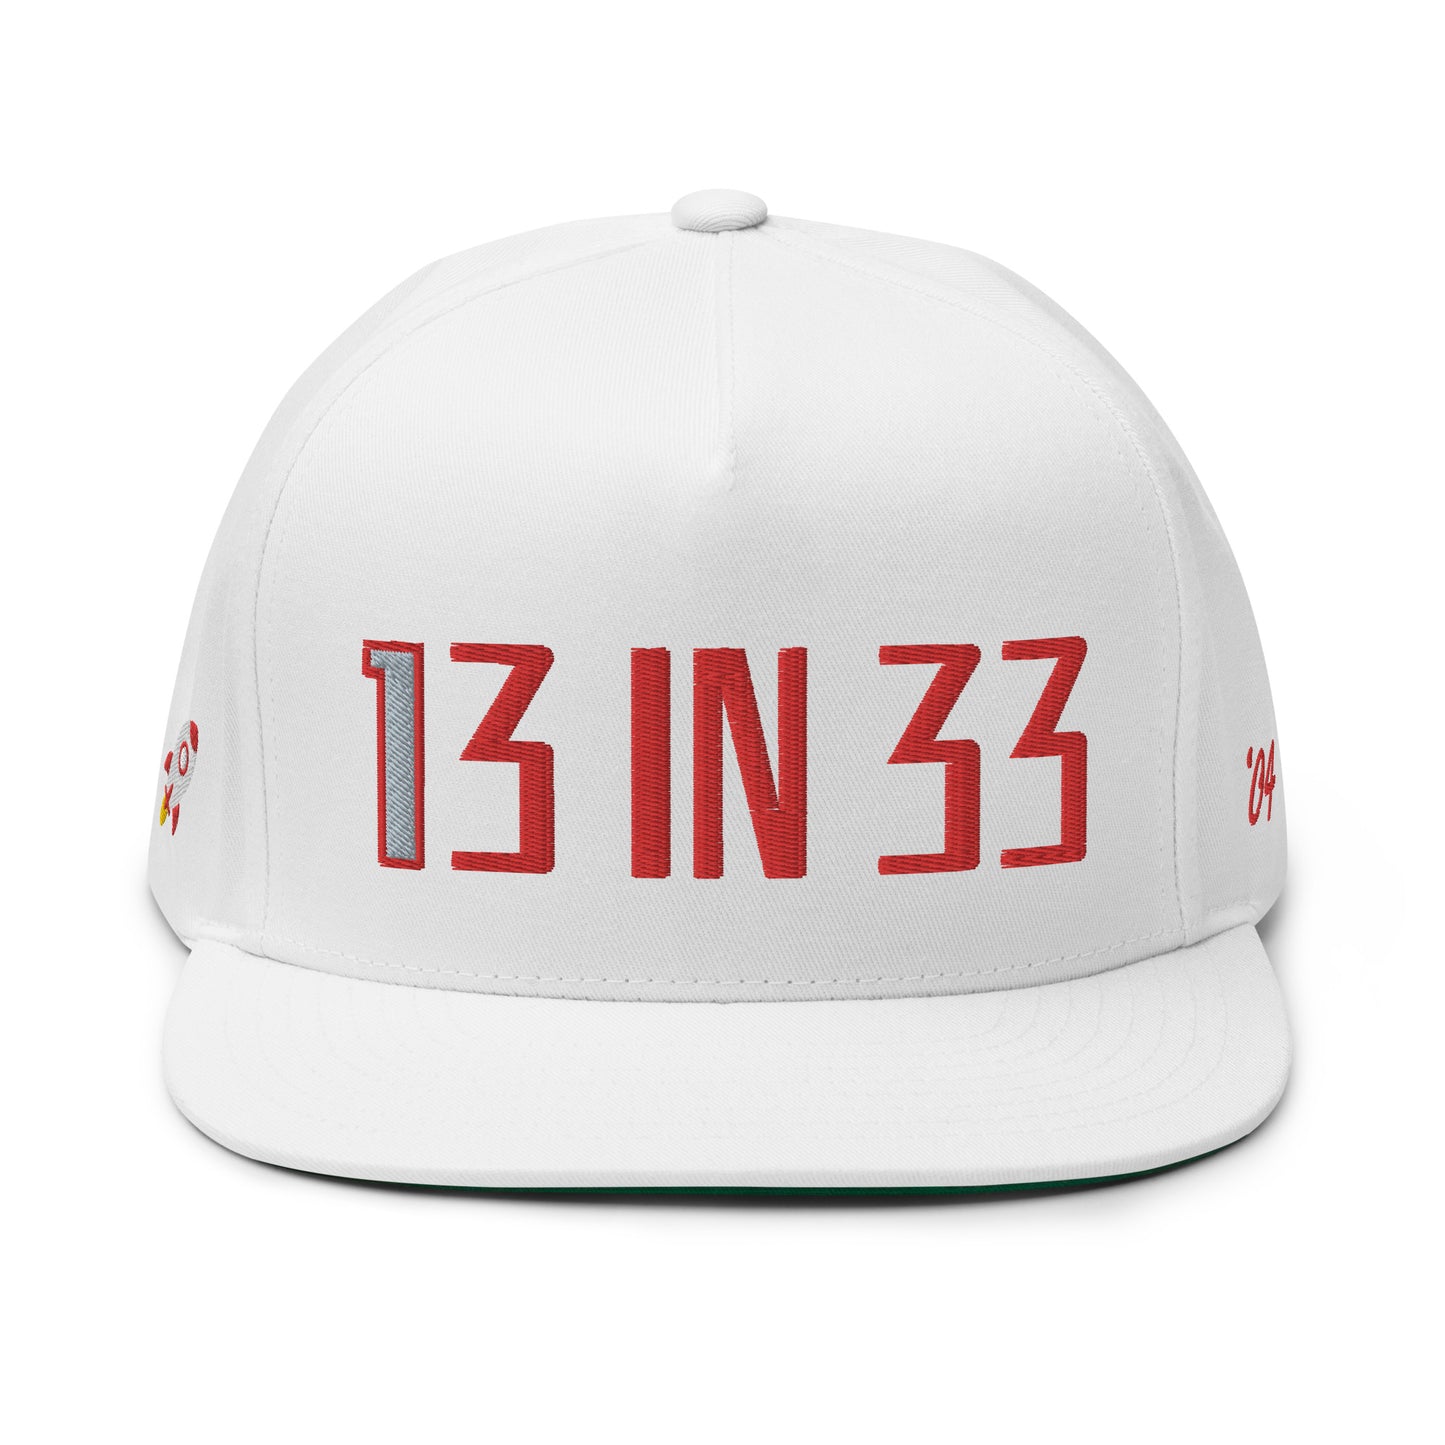 13 in 33 - Houston Rockets - Tracy McGrady